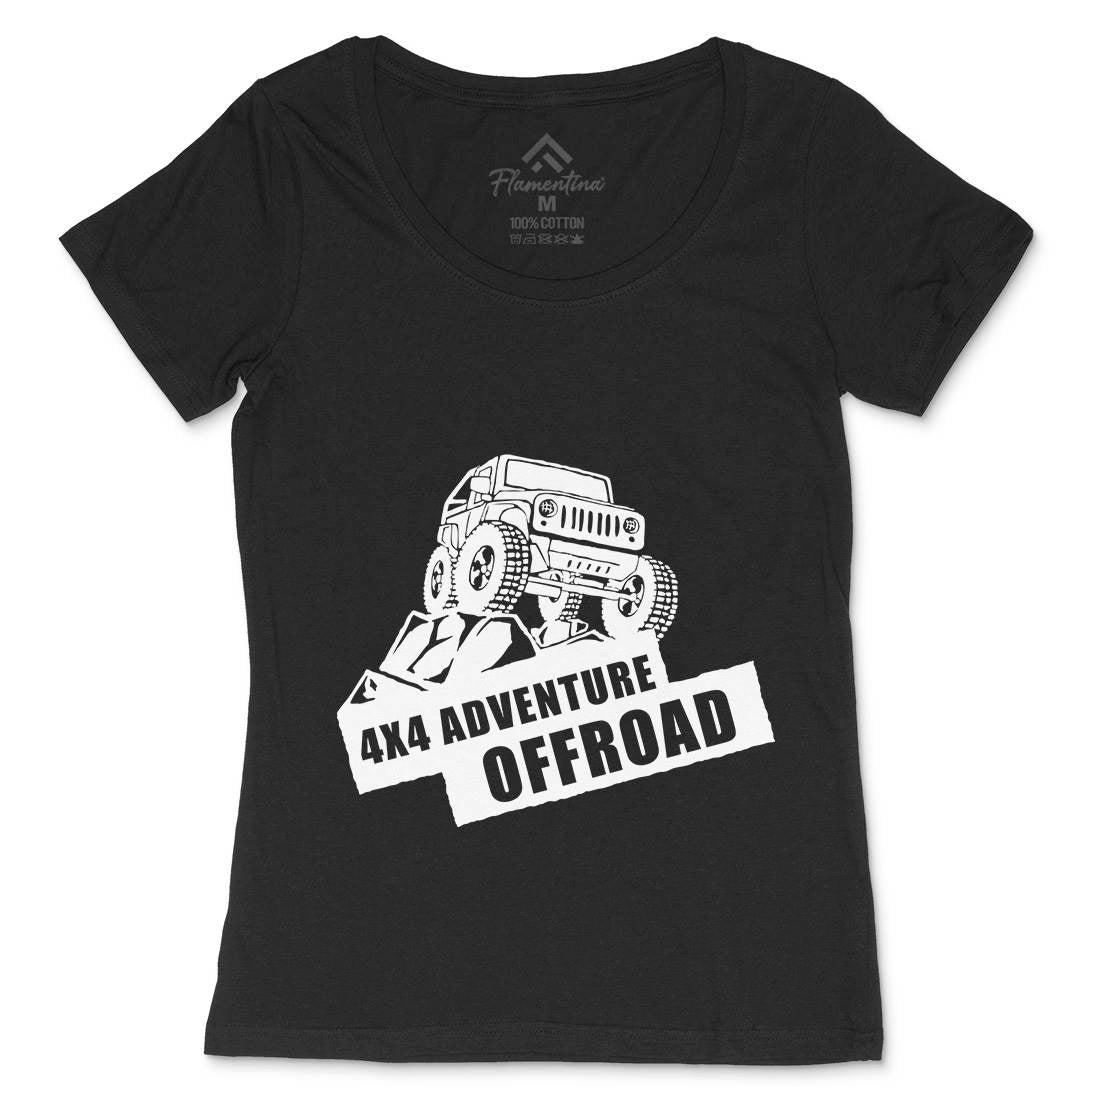 Offroad Adventure Womens Scoop Neck T-Shirt Vehicles A356